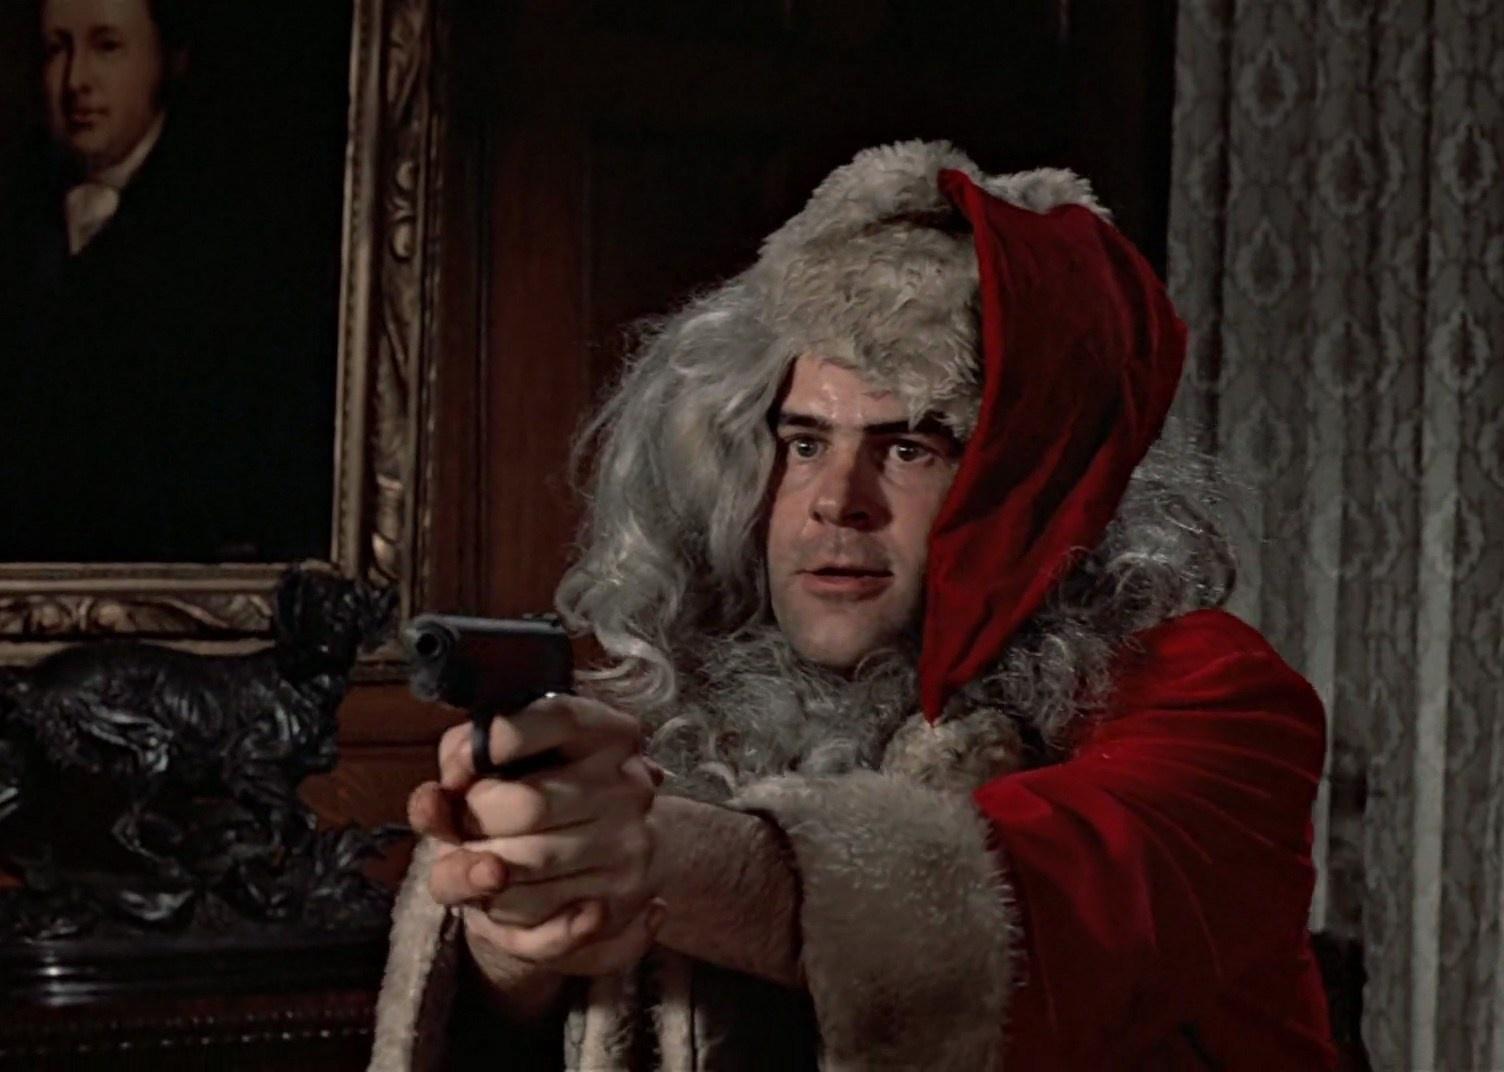 Dan Aykroyd in a santa suit pointing a gun.